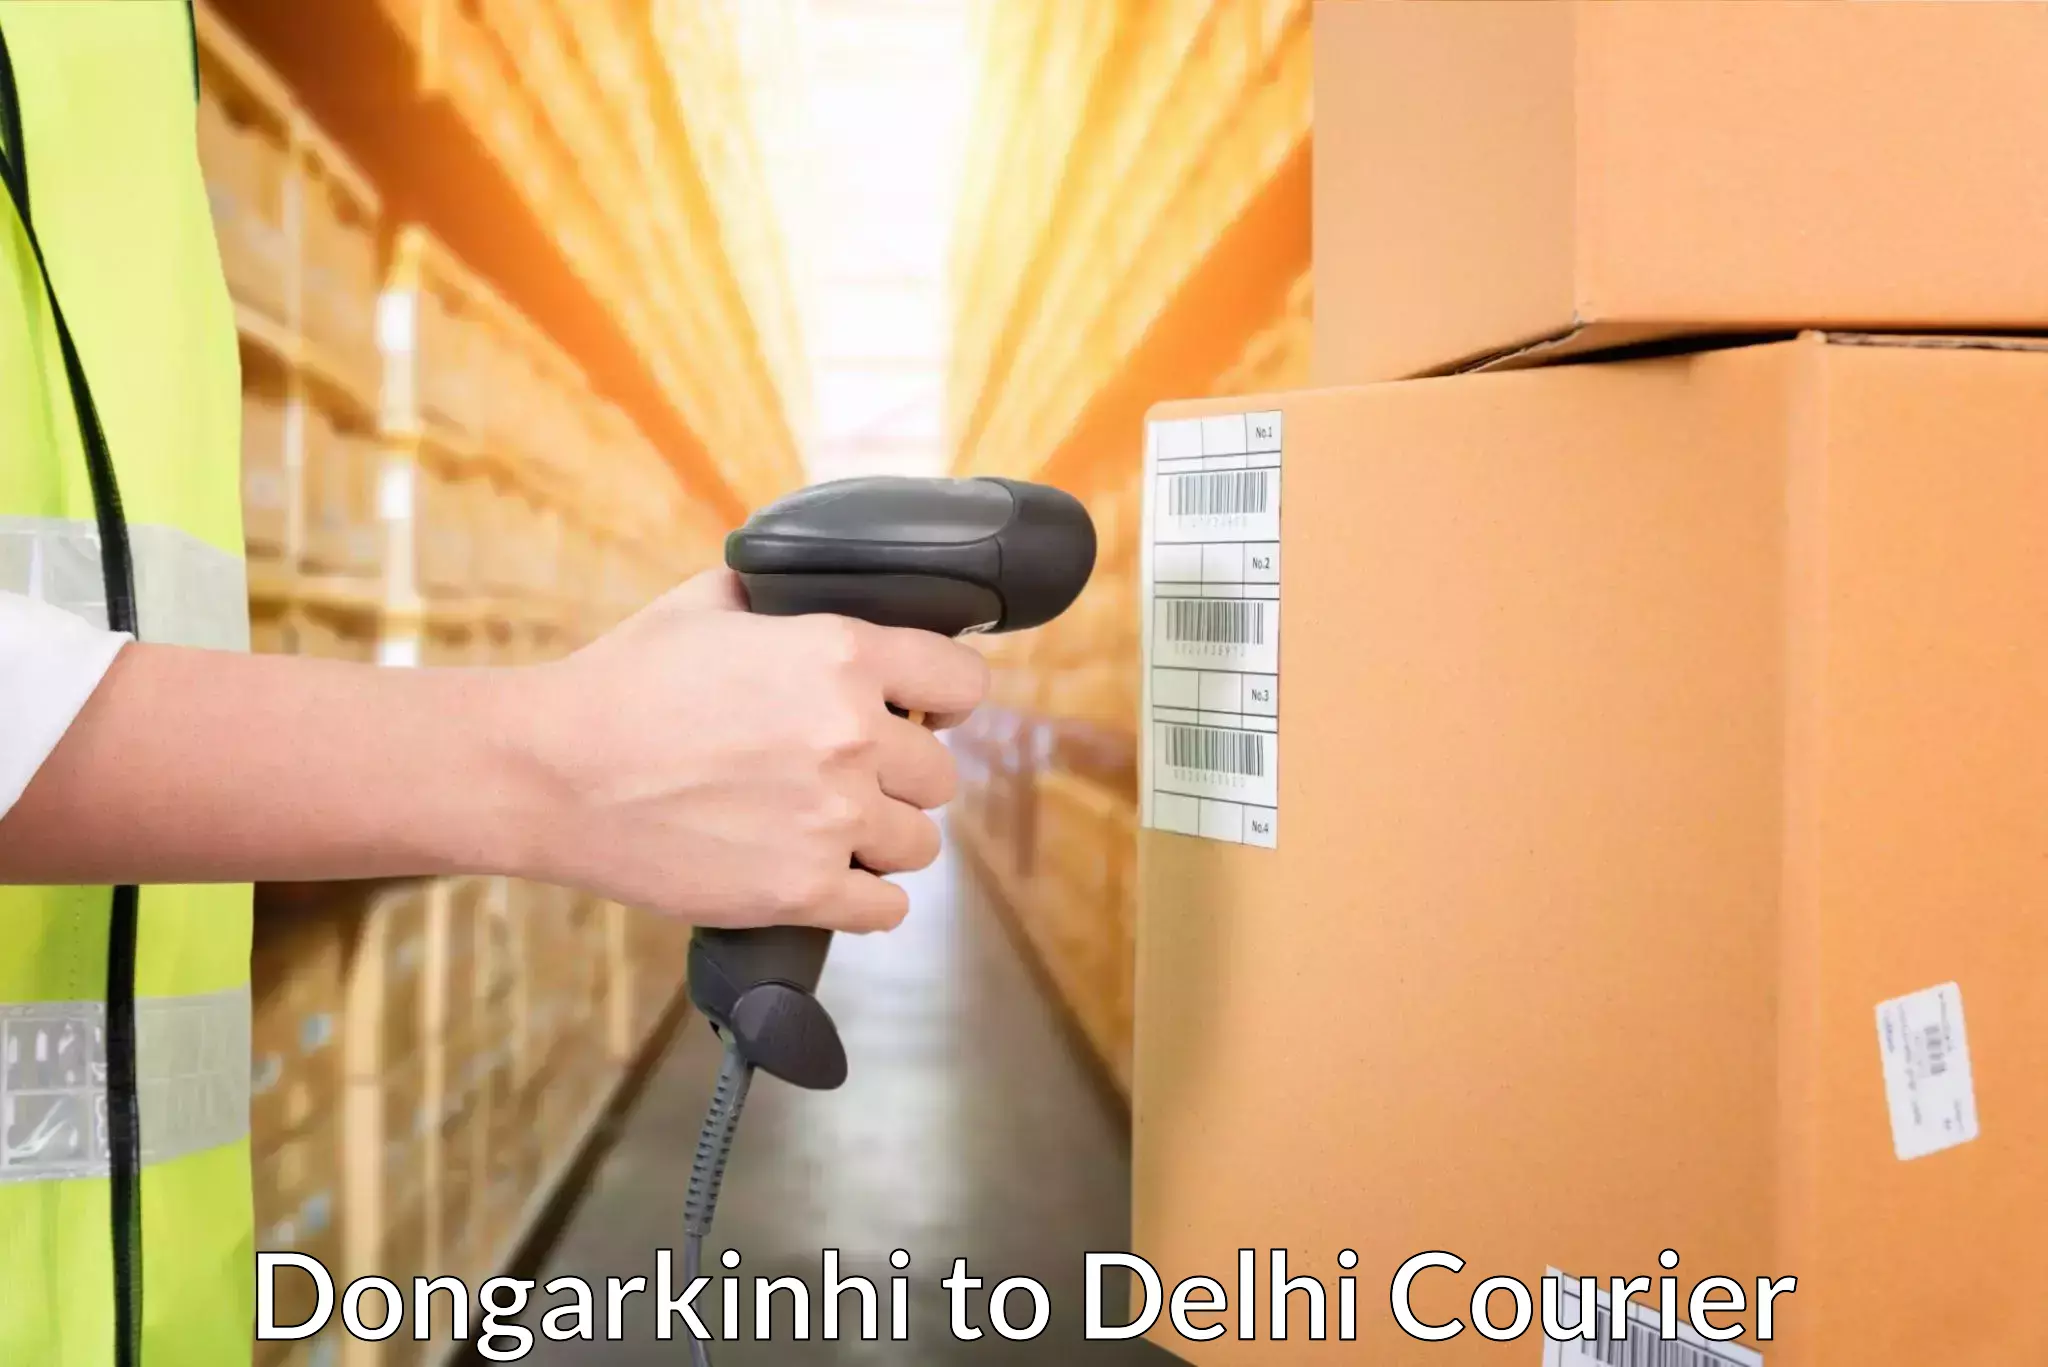 Budget-friendly shipping Dongarkinhi to Lodhi Road